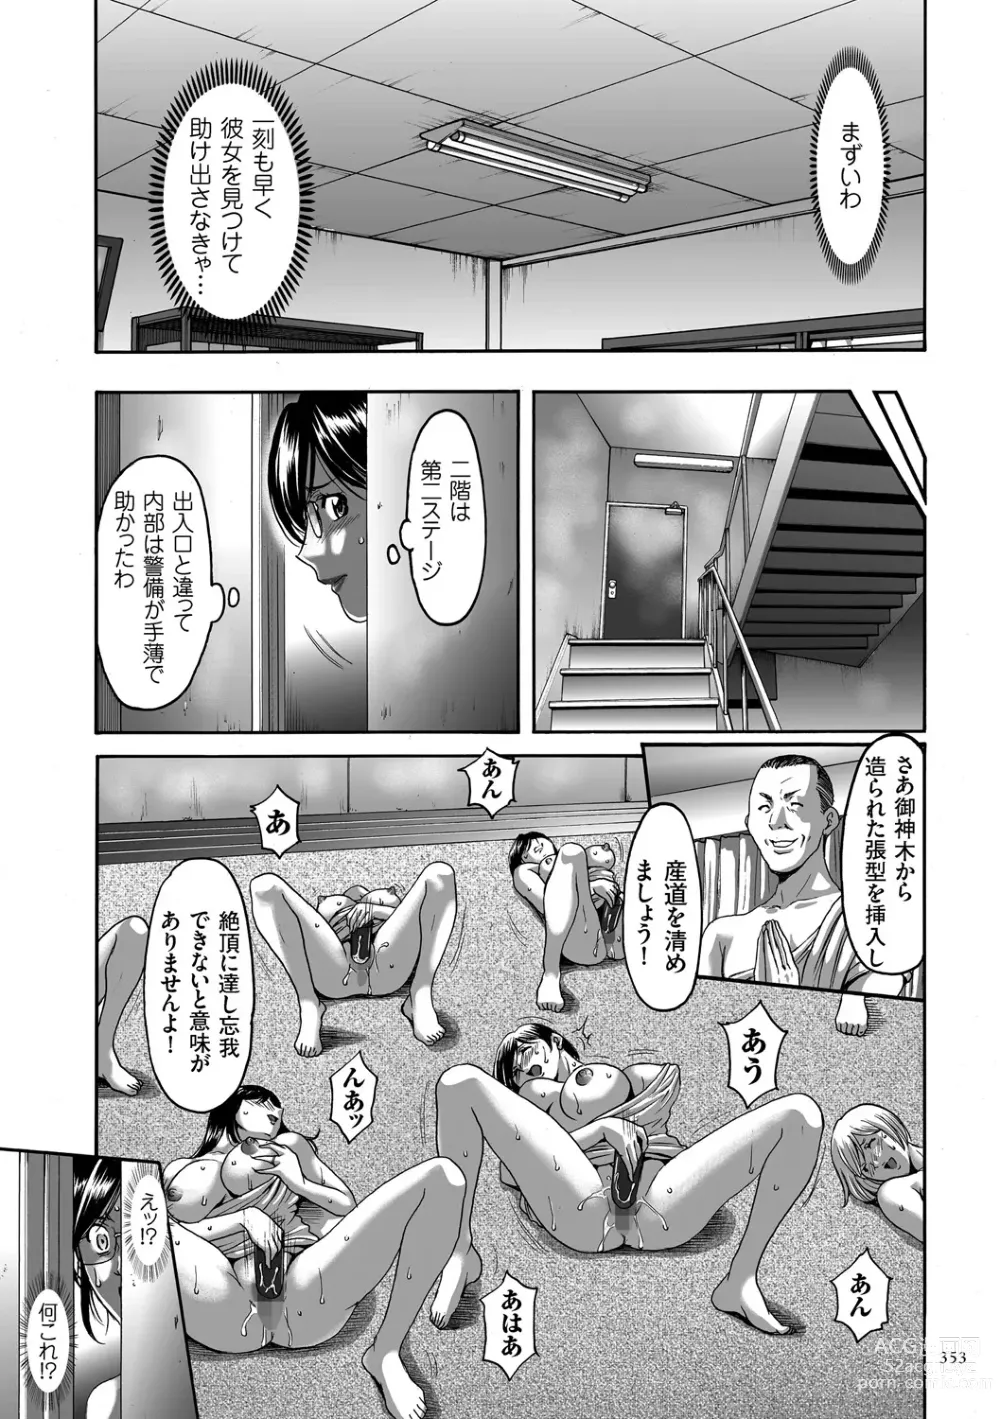 Page 353 of manga Sennyu Tsuma Satomi Kiroku